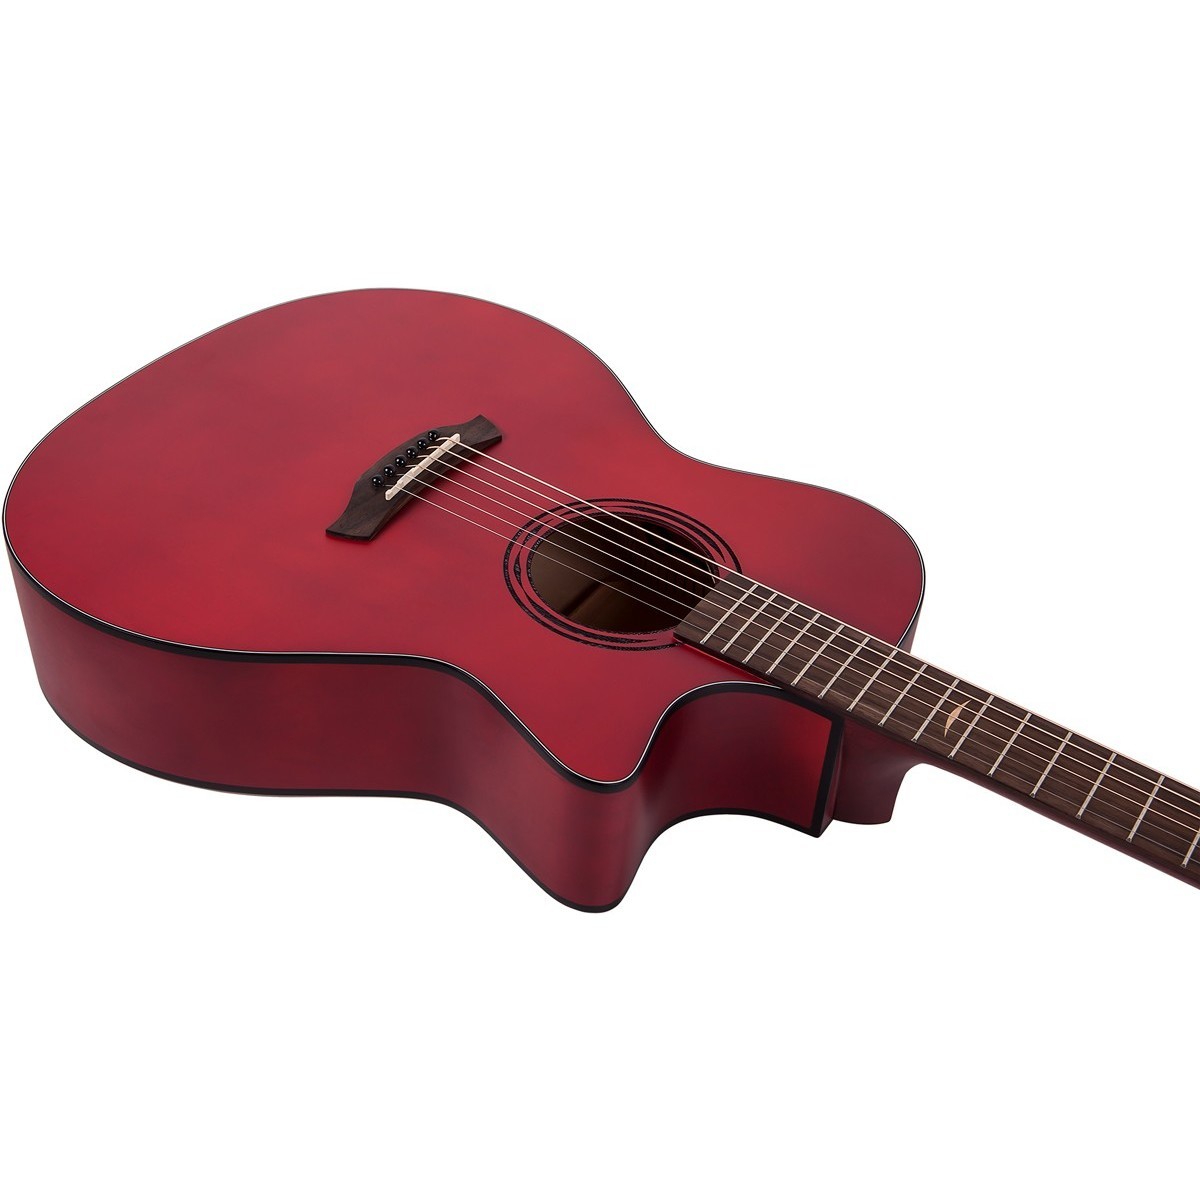 Компания Baton Rouge представляет гитара Baton Rouge AR21S/GACE-AR. 